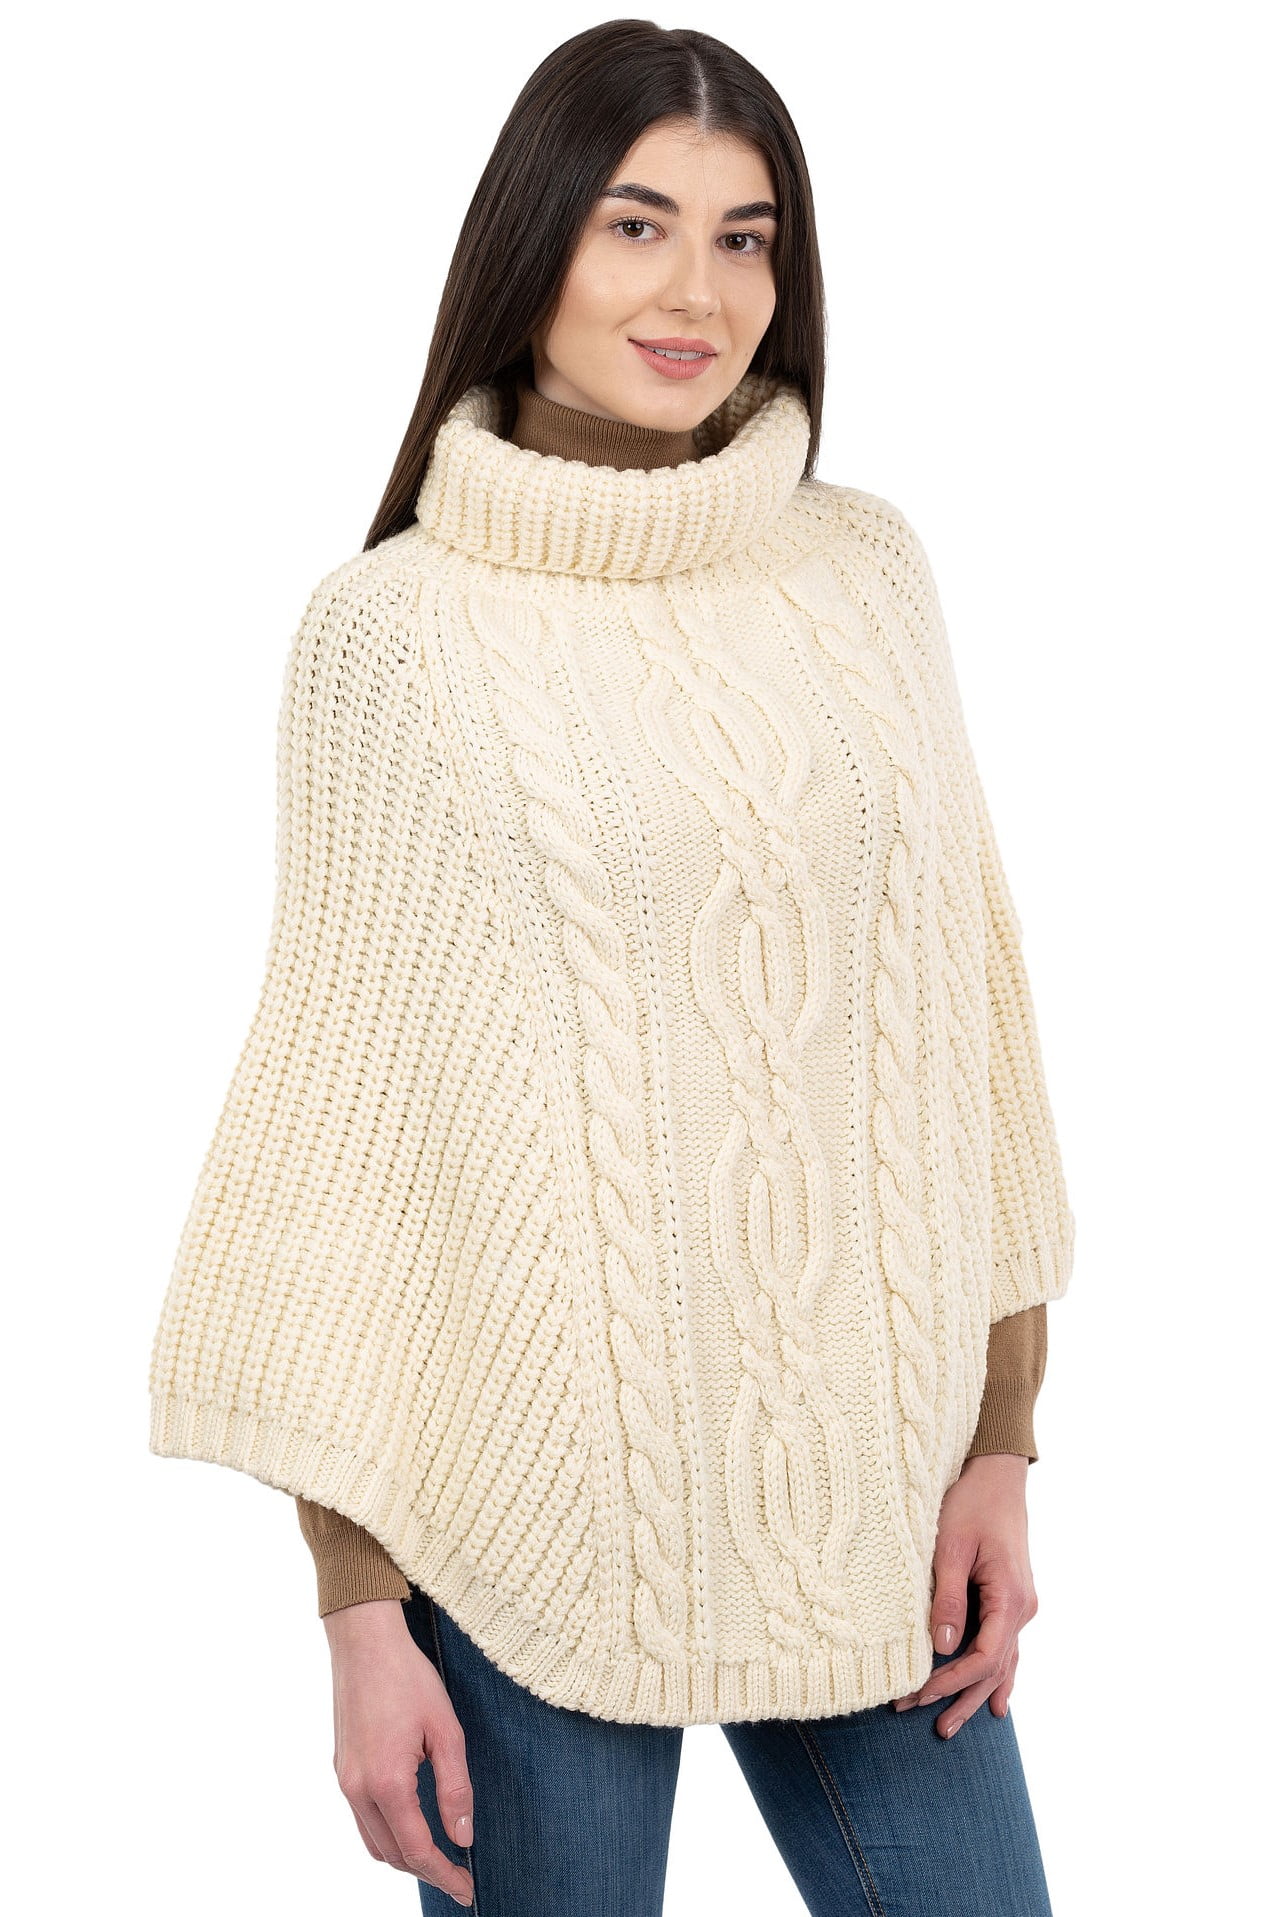 SAOL 100% Merino Wool Women's Aran Cable Knit Oversize Sweater High Neck Irish Cape Made in Ireland - Walmart.com